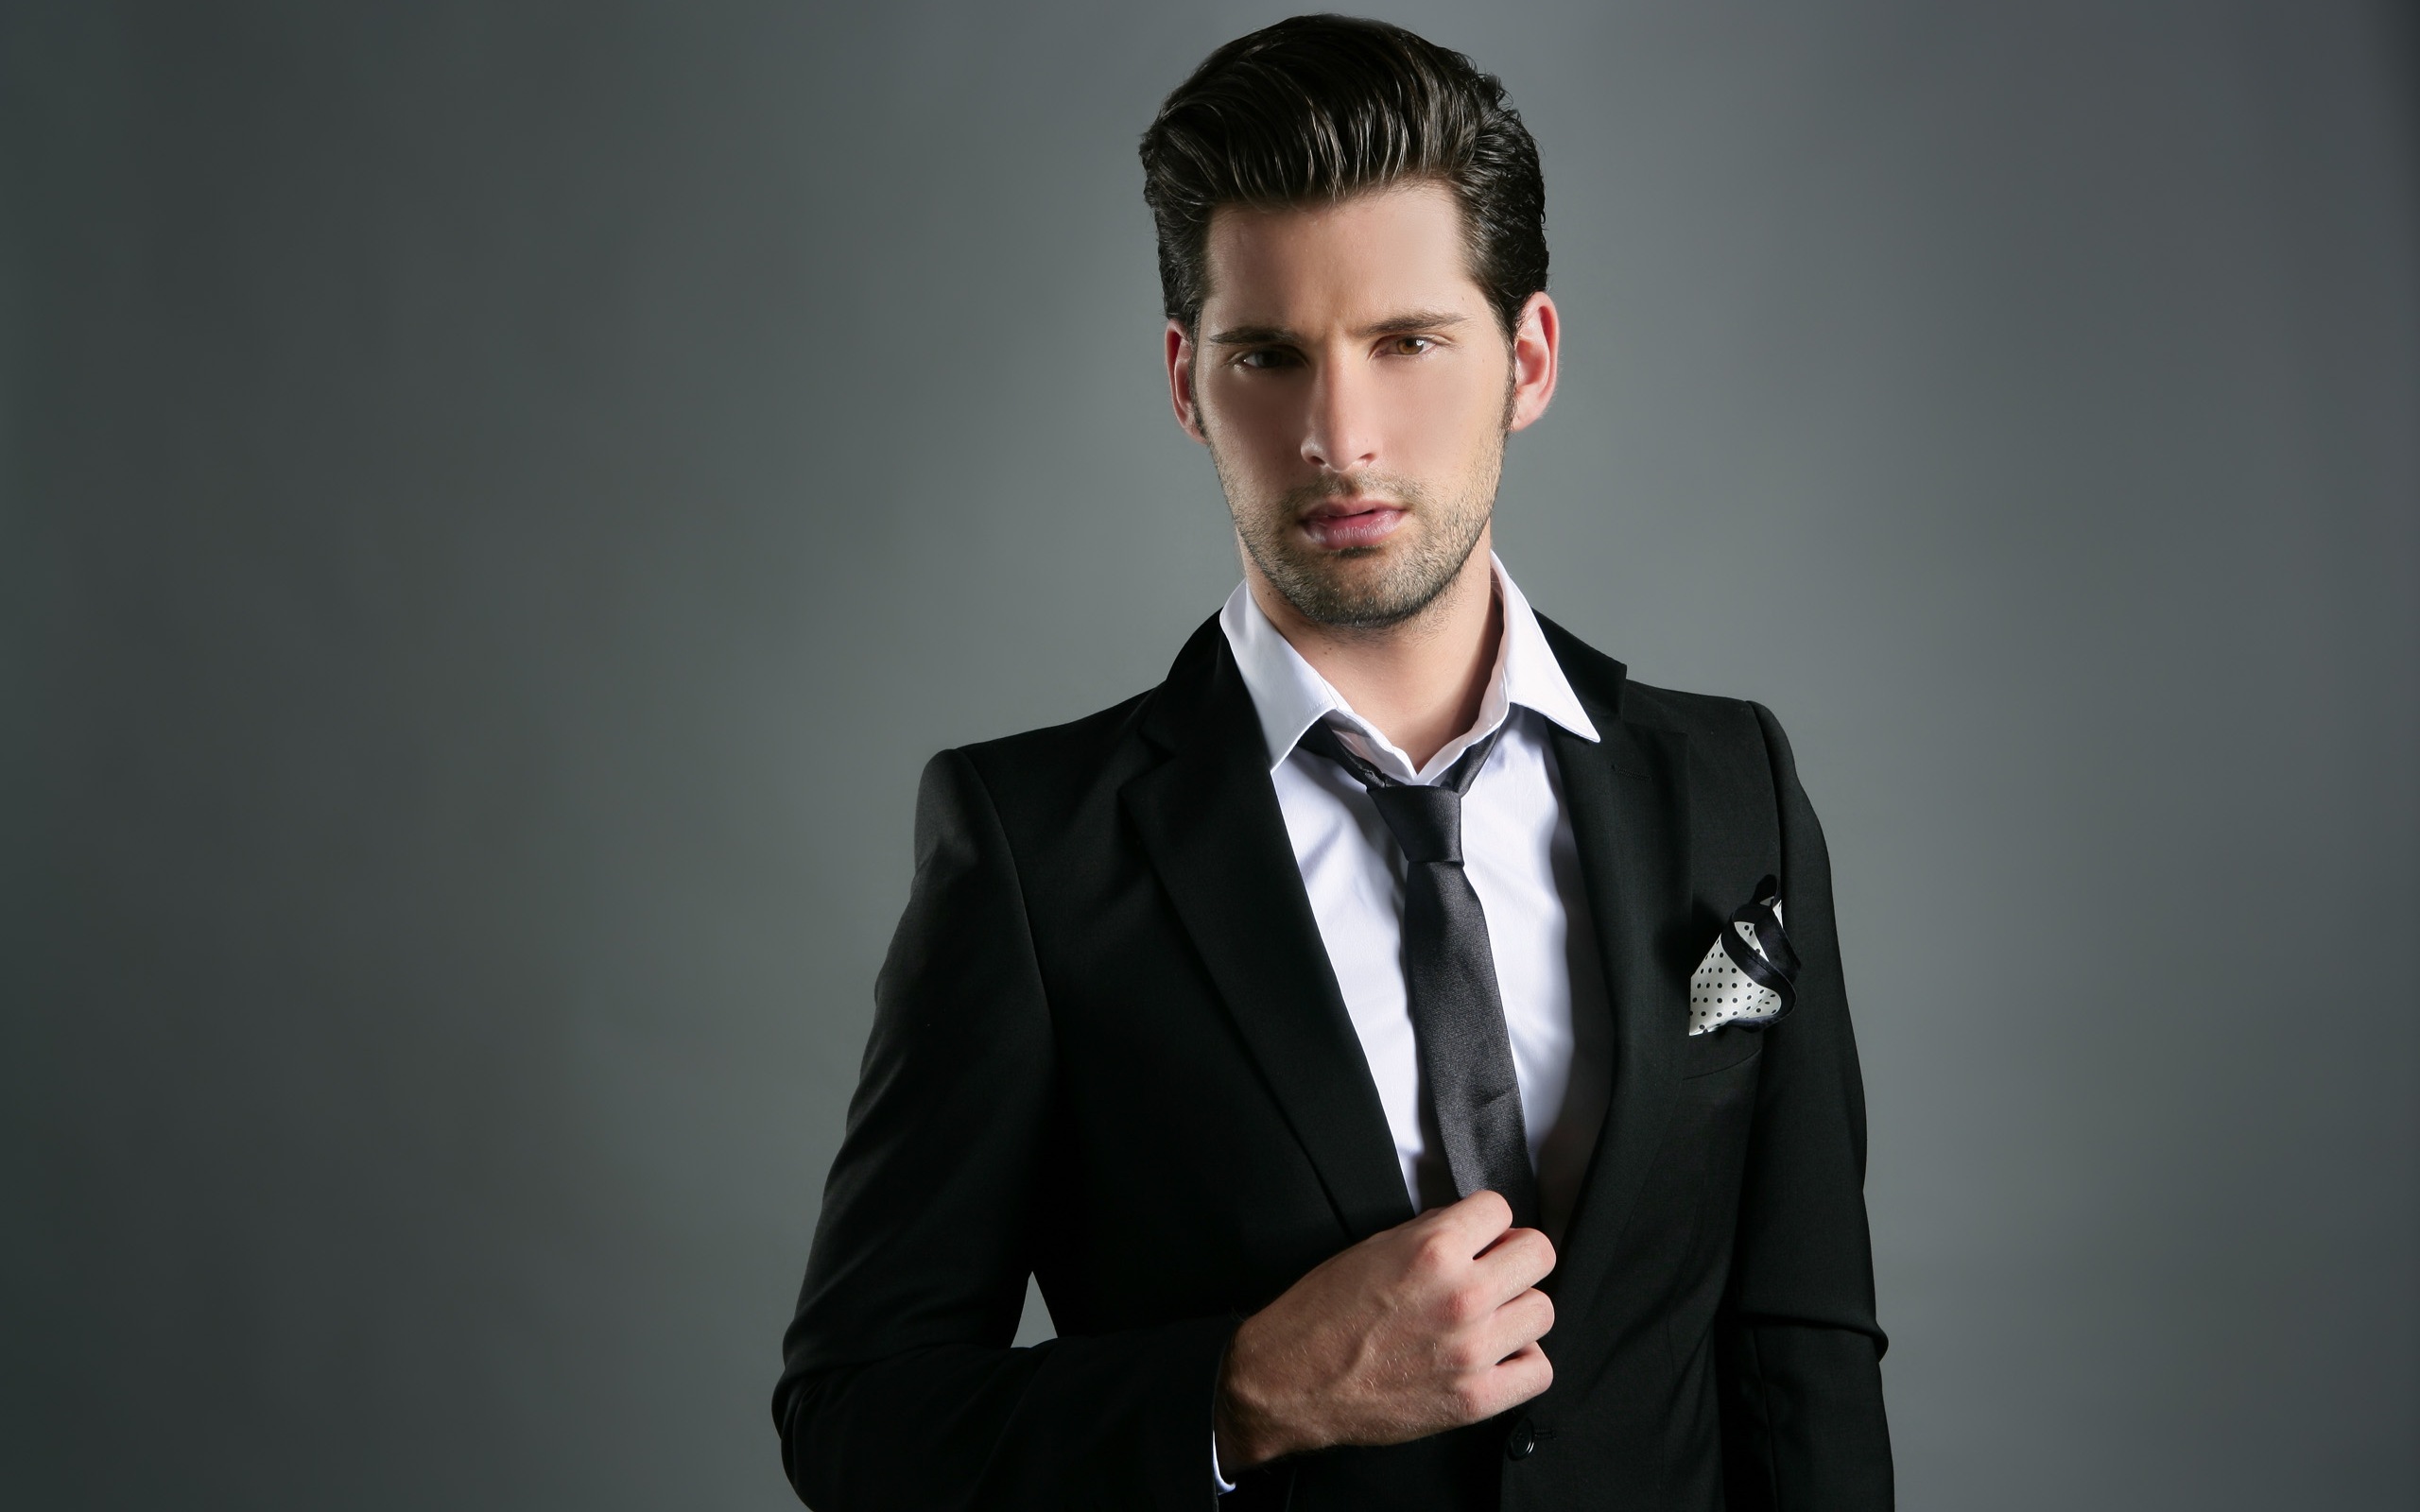 handsome guy wallpaper,suit,formal wear,white collar worker,tuxedo,tie